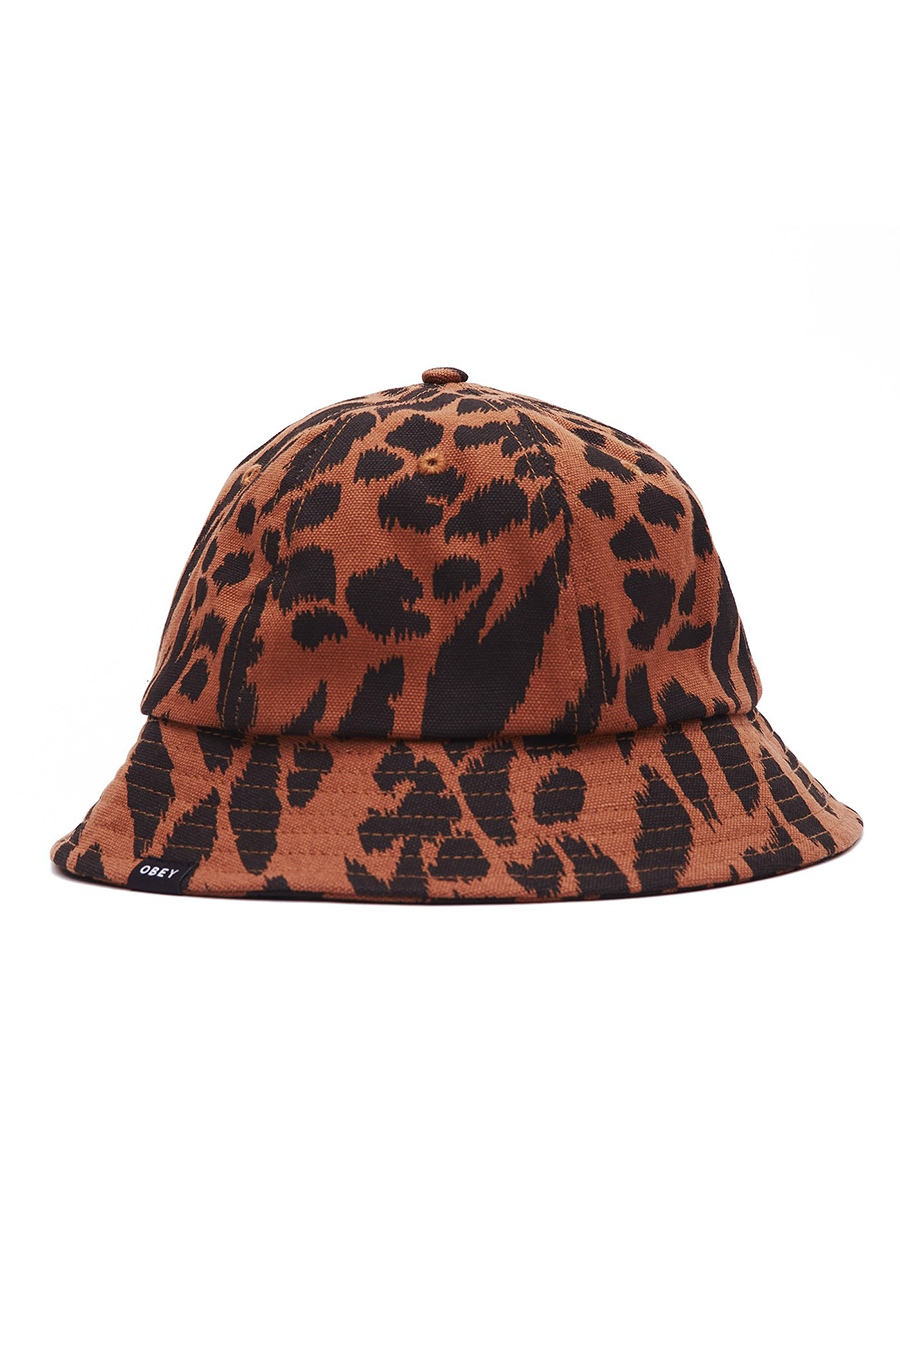 Lebra Bucket Hat | Black Multi - Main Image Number 1 of 1